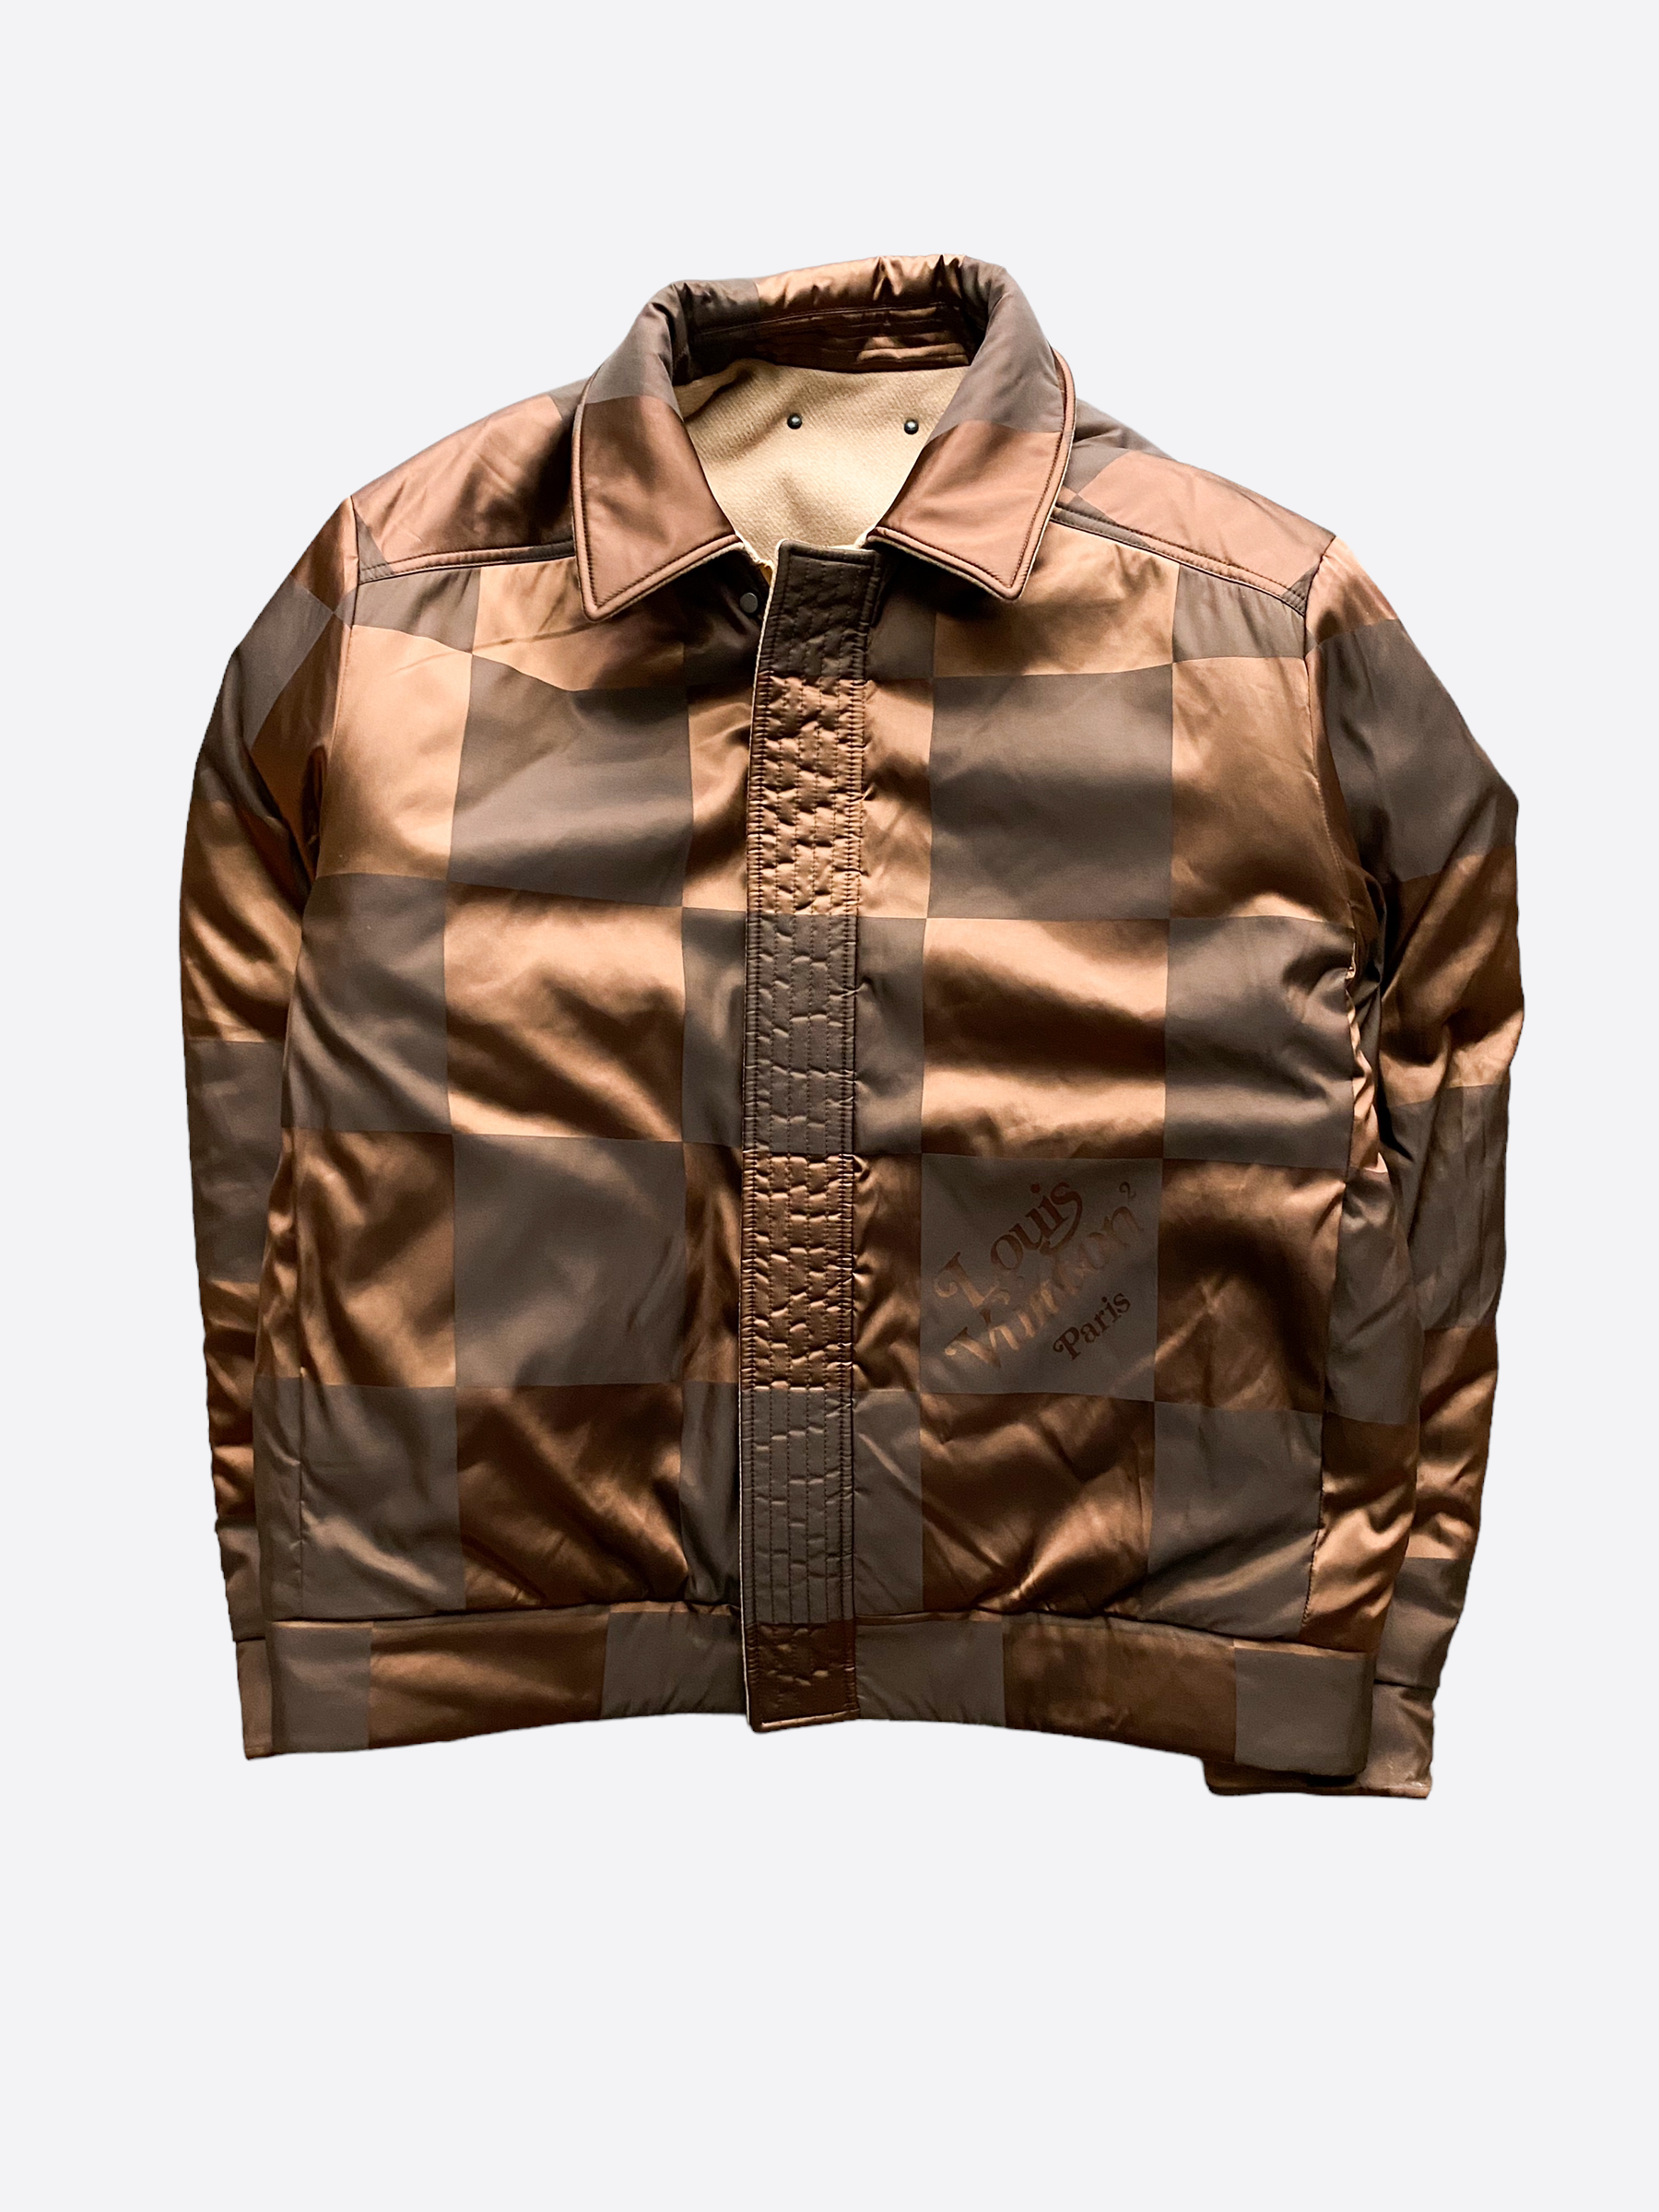 Louis Vuitton Reversible Damier Print Bomber Jacket